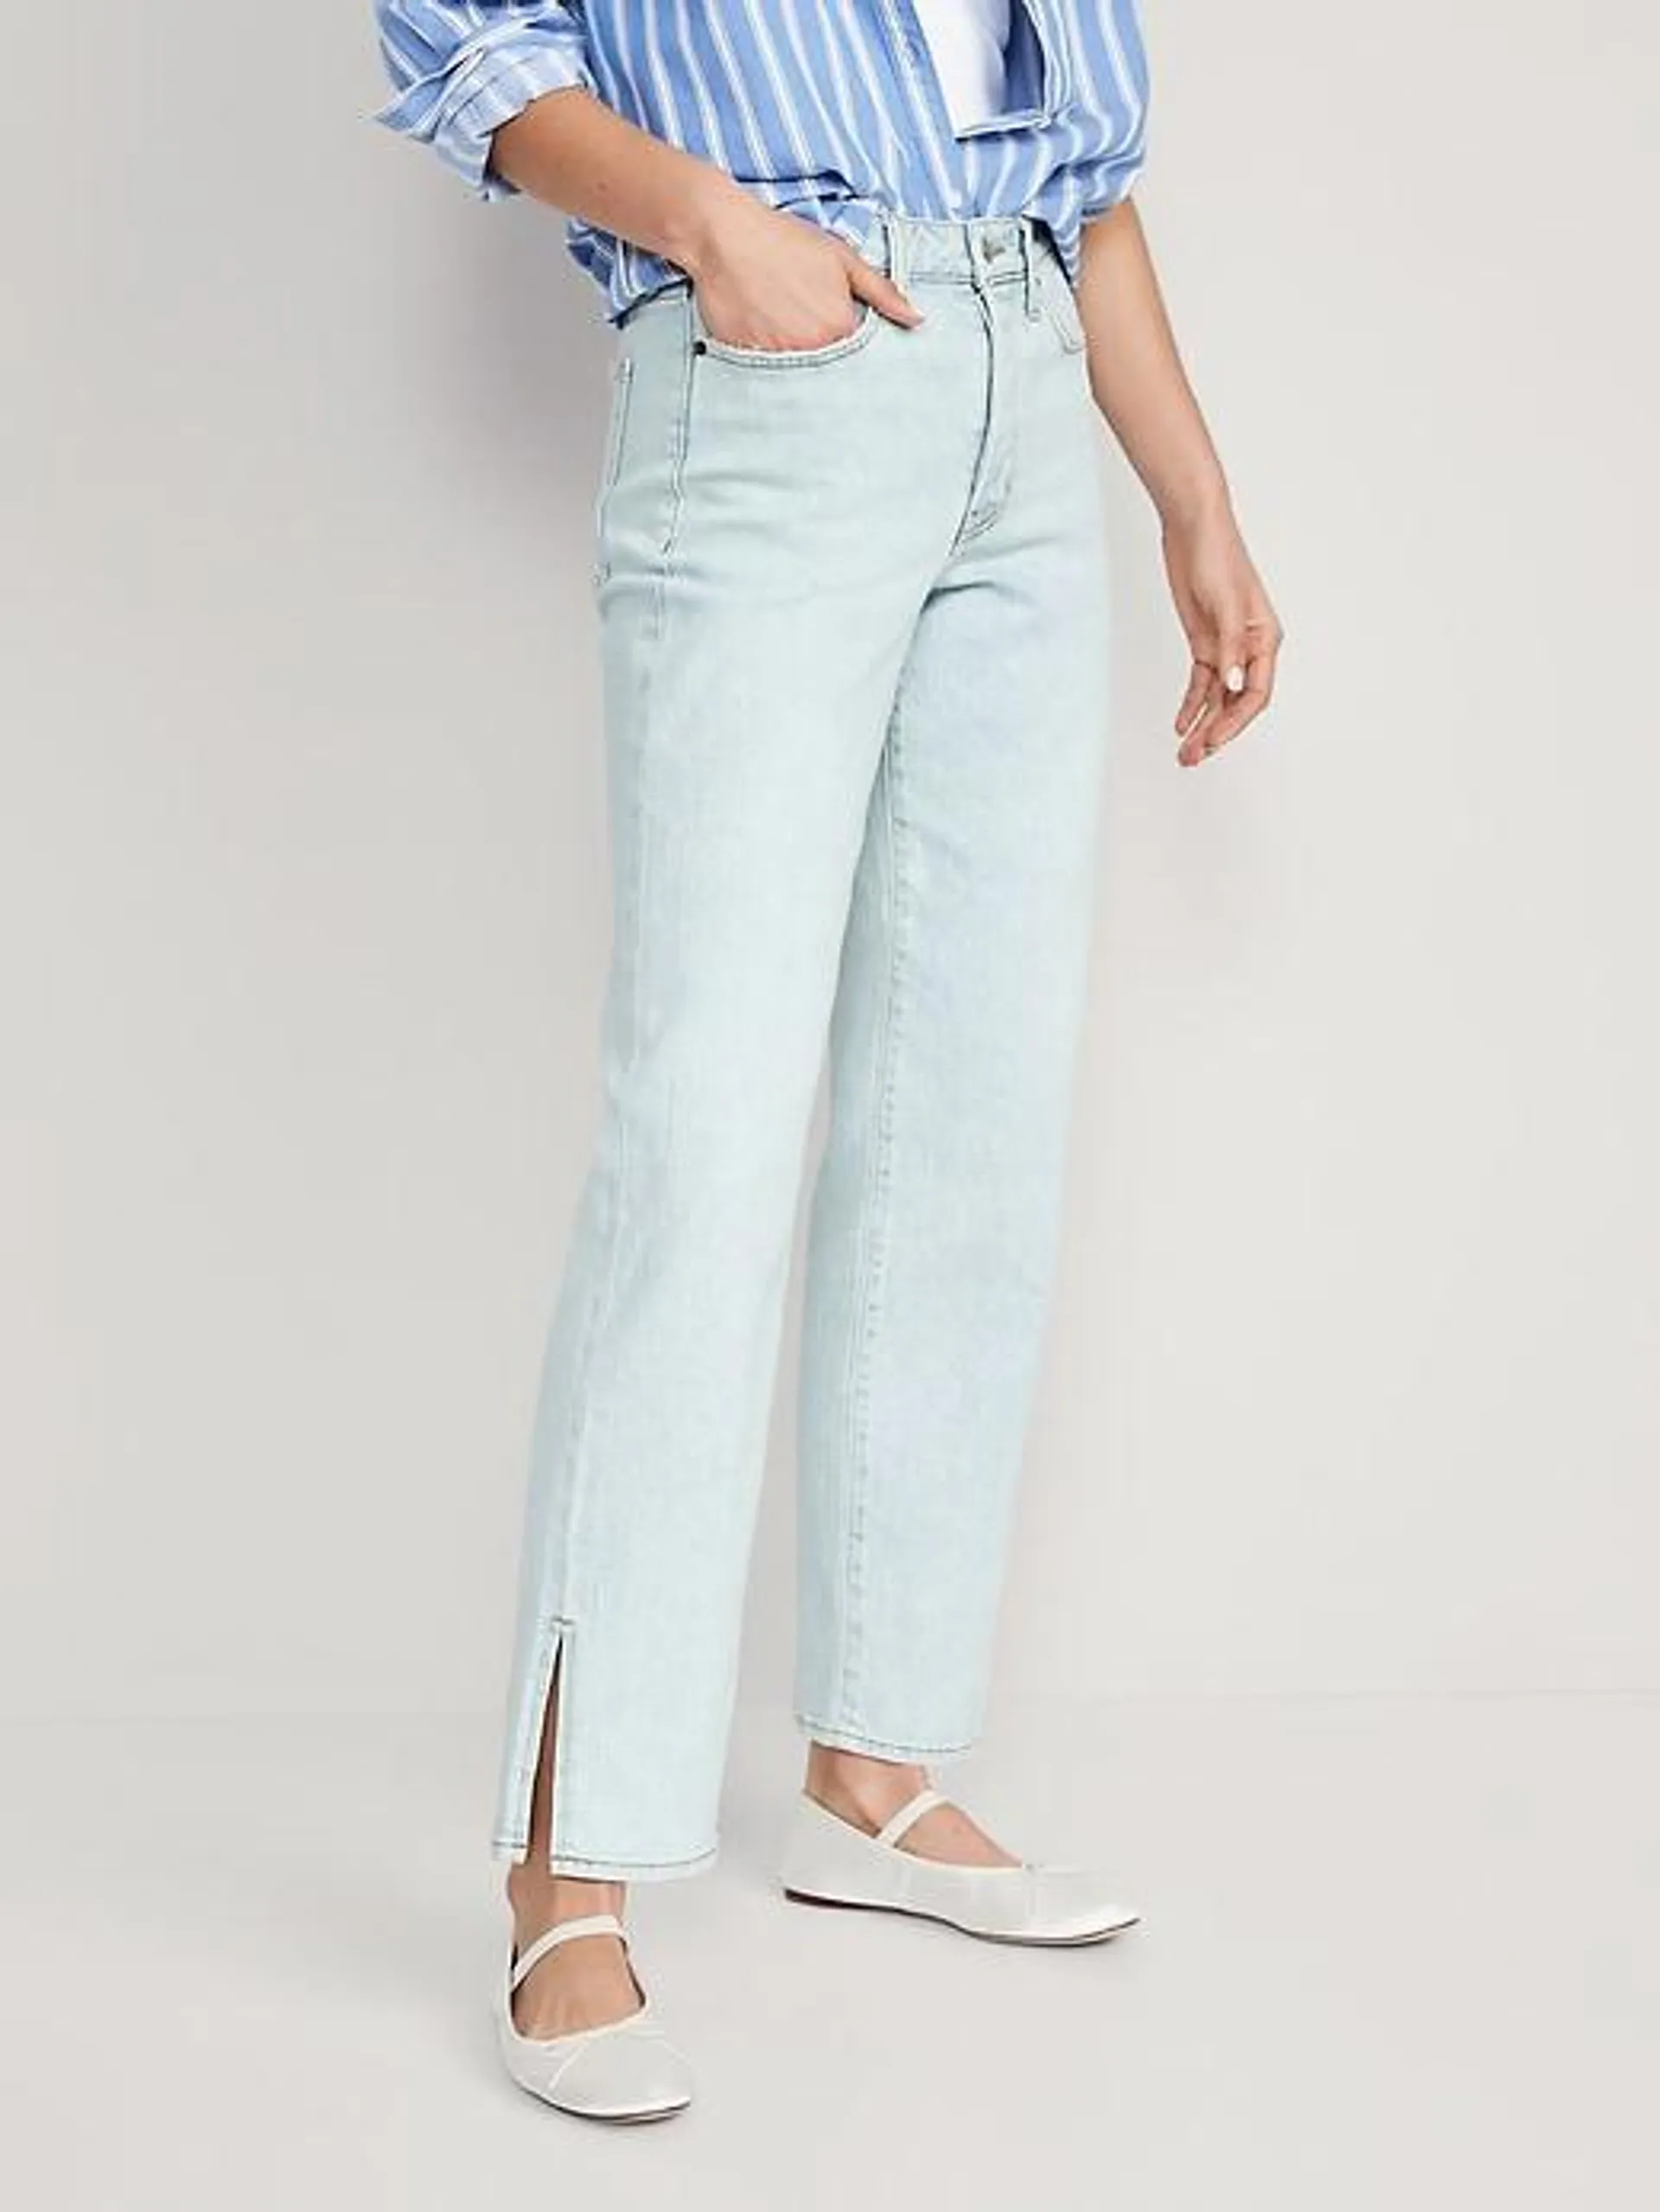 High-Waisted Button-Fly OG Loose Side-Split Jeans for Women